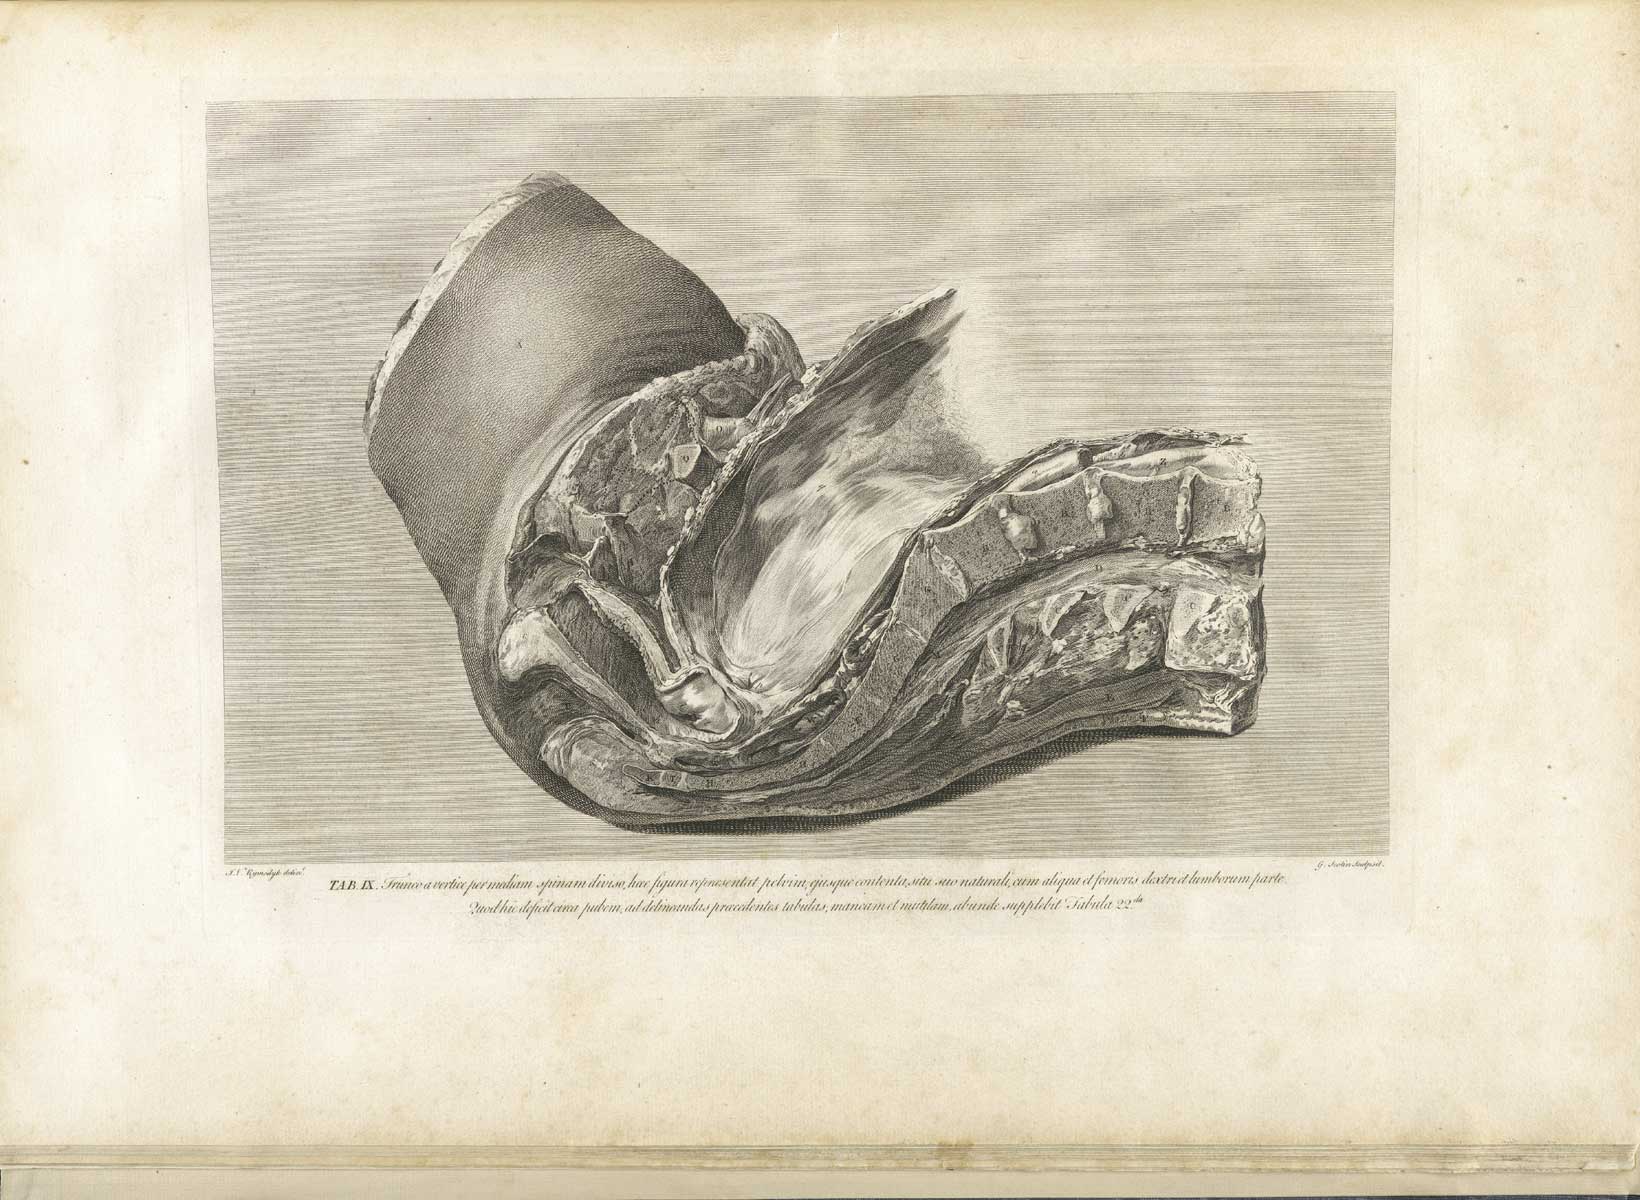 Table 9 of William Hunter's Anatomia uteri humani gravidi tabulis illustrata, featuring an illuminated inital of five small children putting a skull into a cooking pot over a fire.